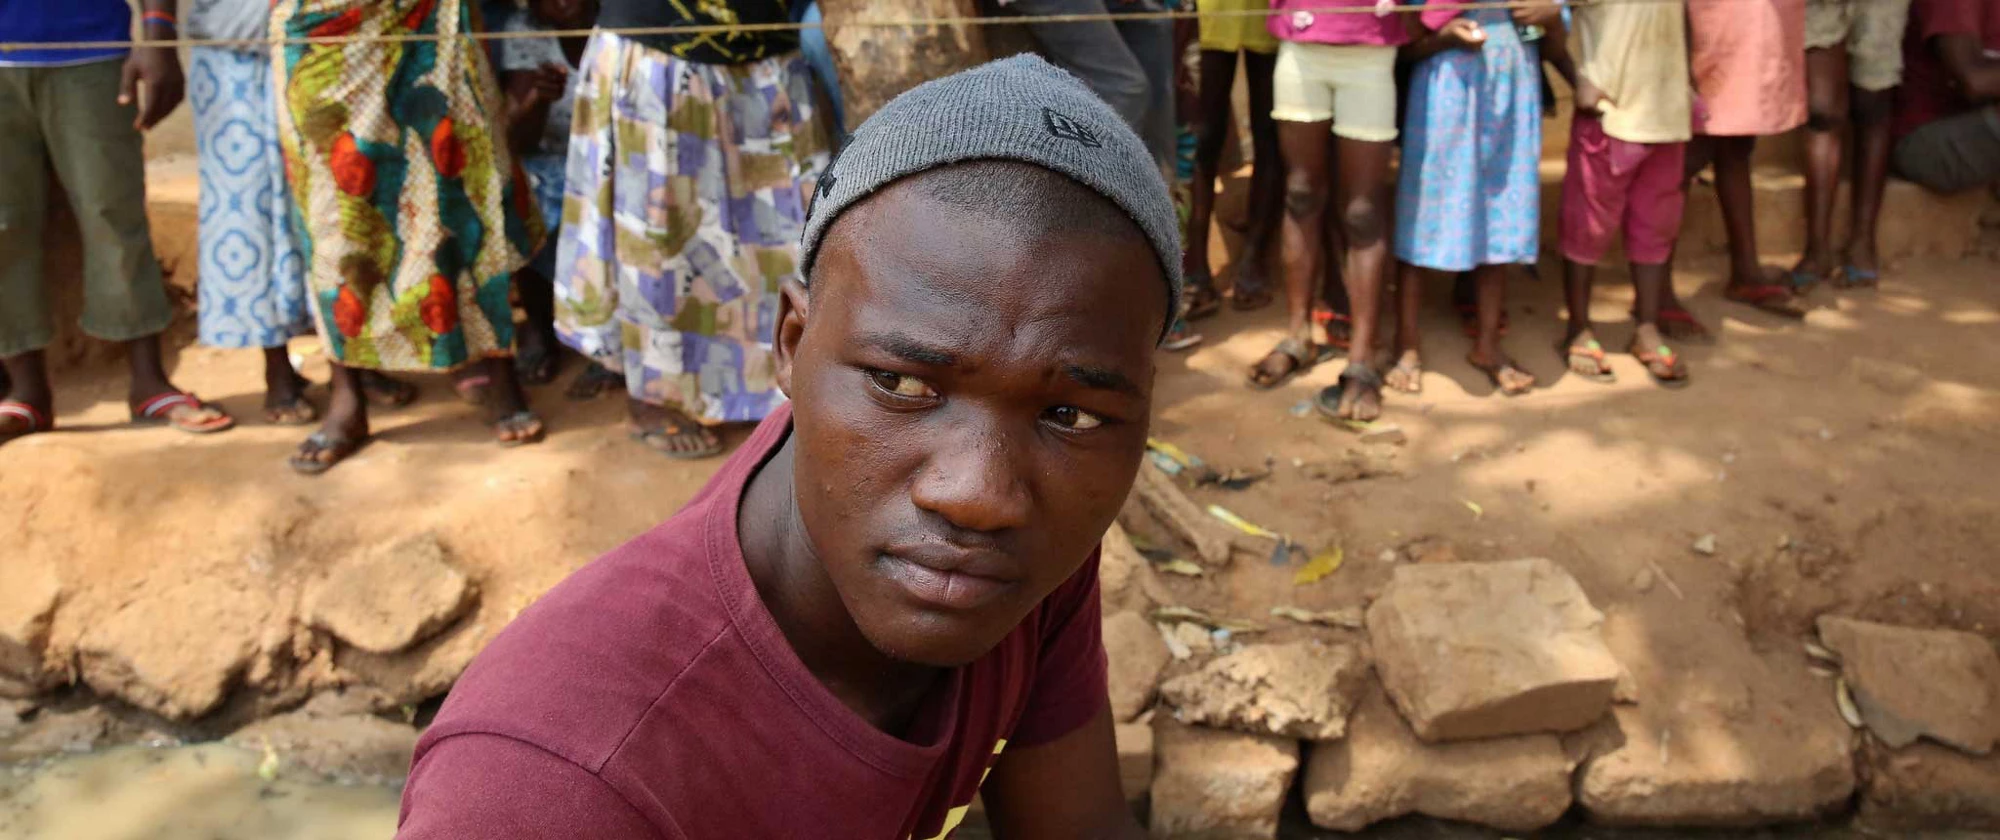 An ebola survivor, Sierra Leone